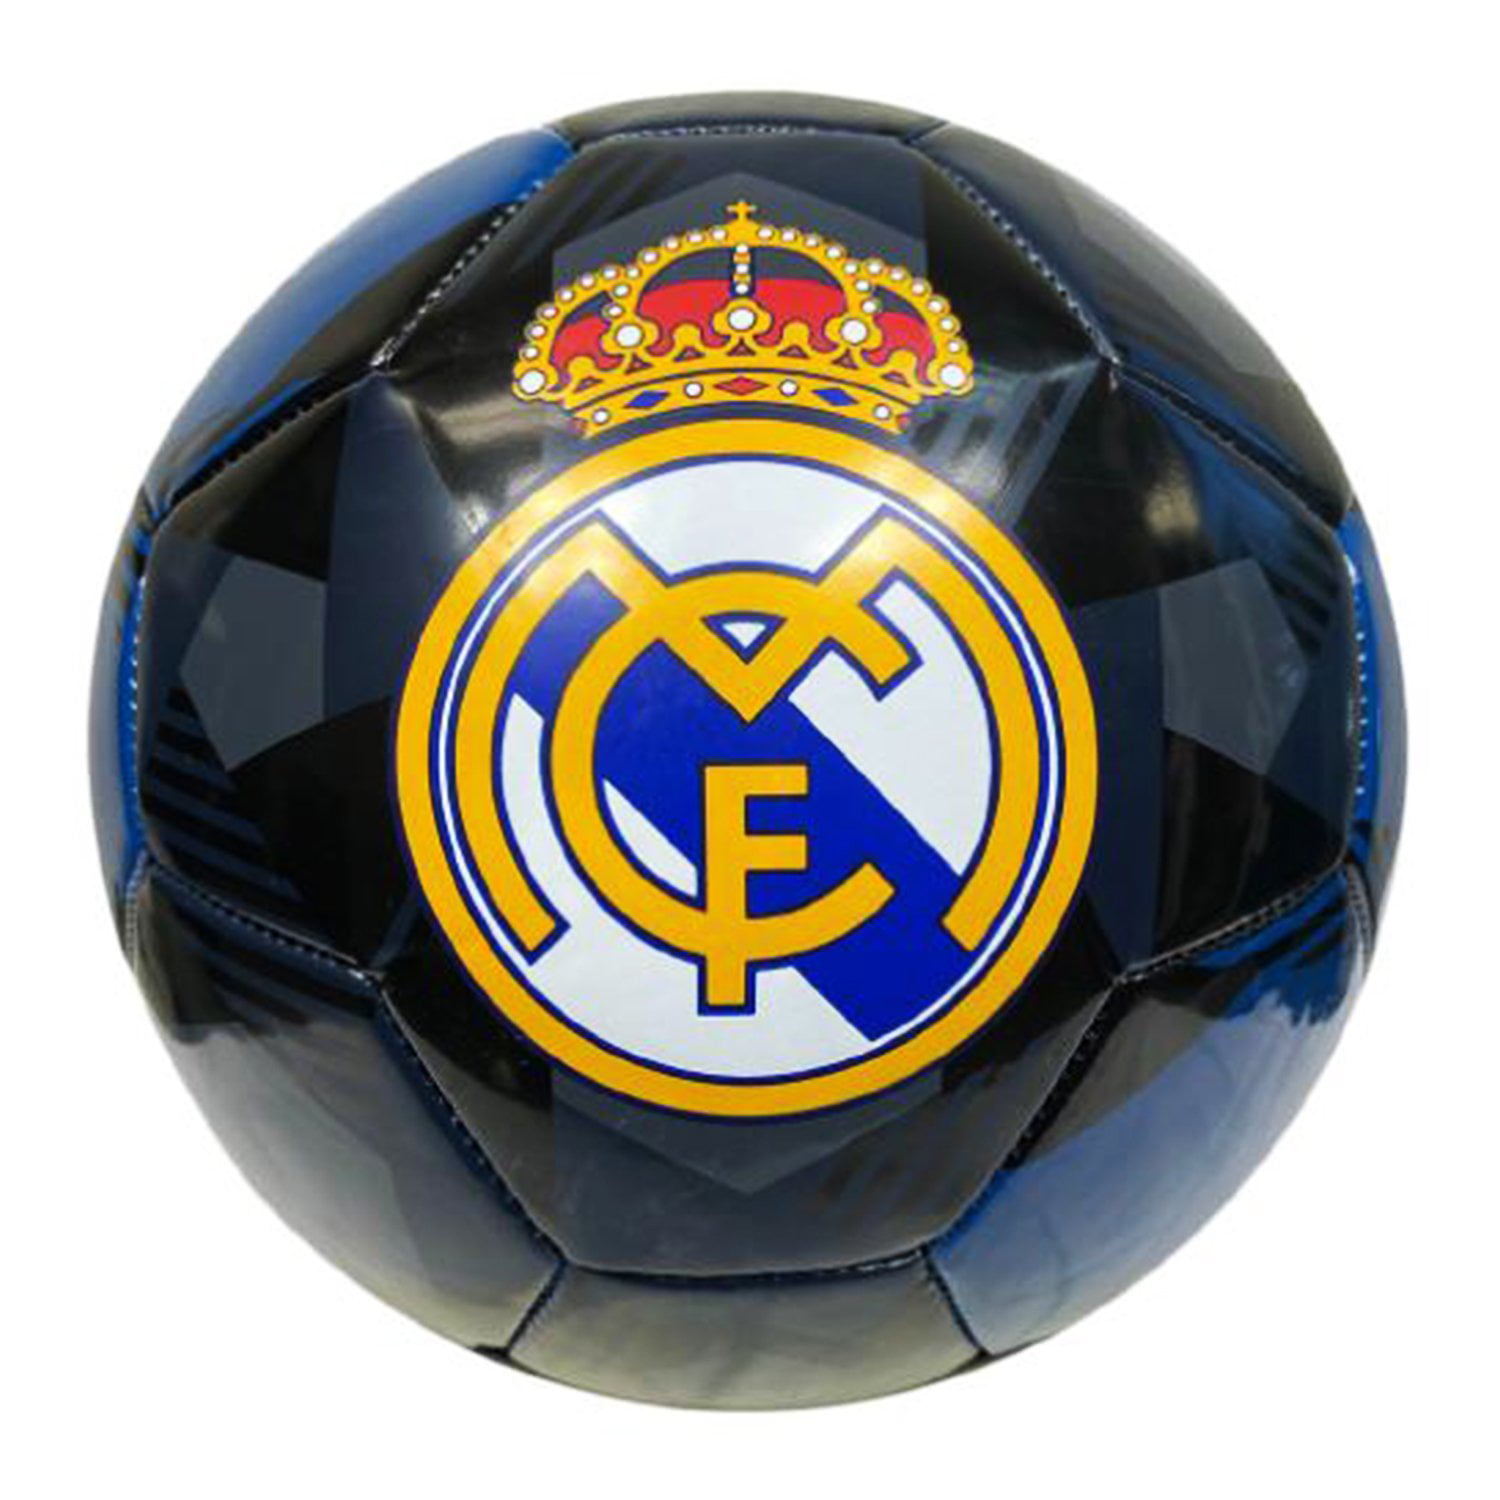 Icon Sports Compatible avec le ballon de football Real Madrid